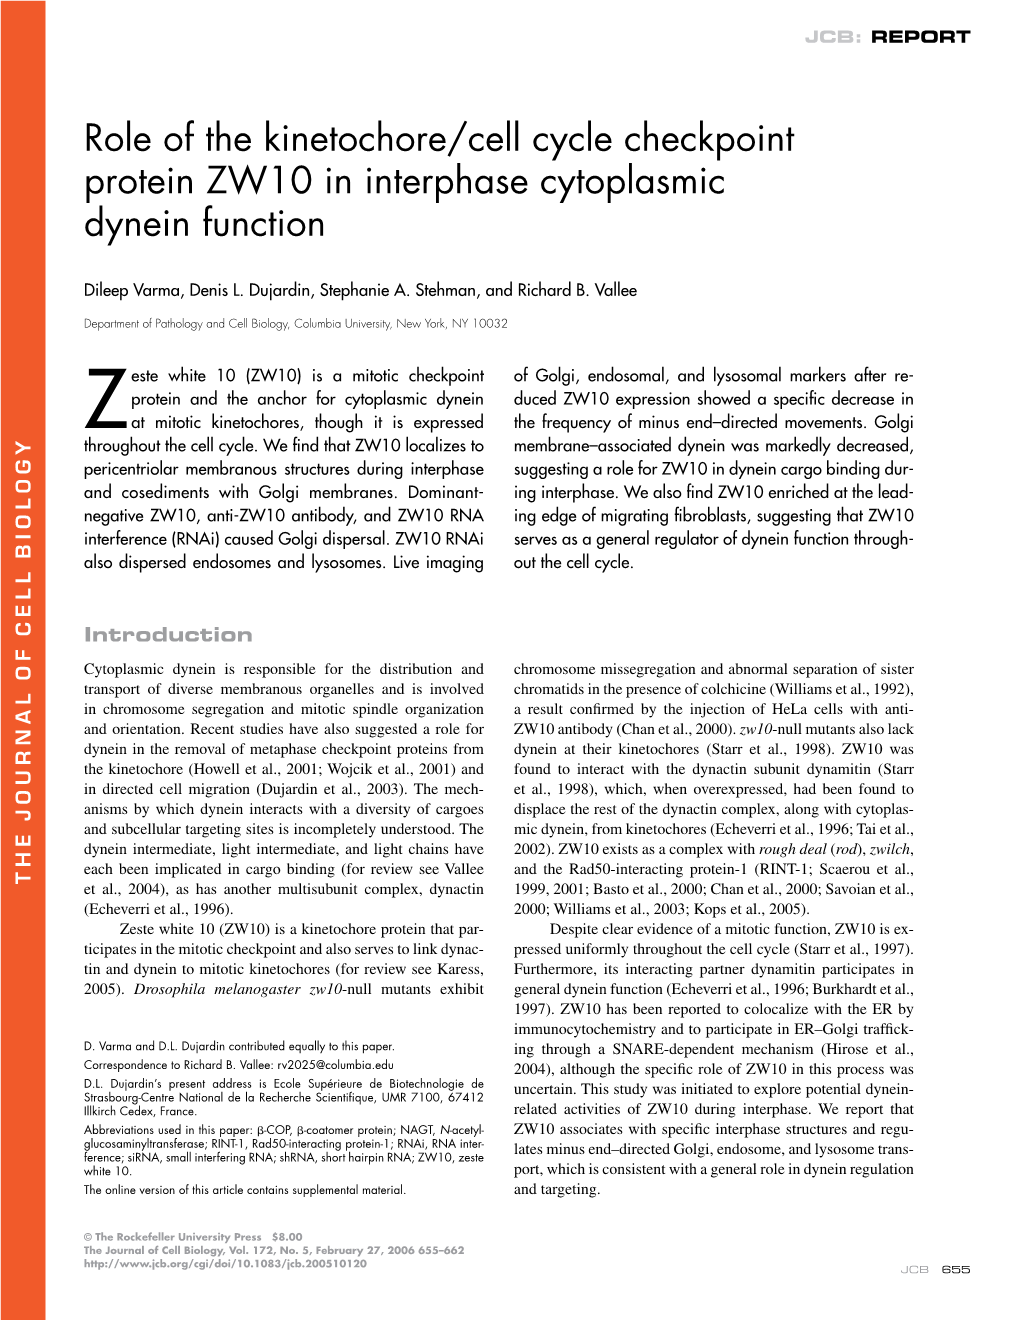 Protein ZW10 in Interphase Cytoplasmic Dynein Function